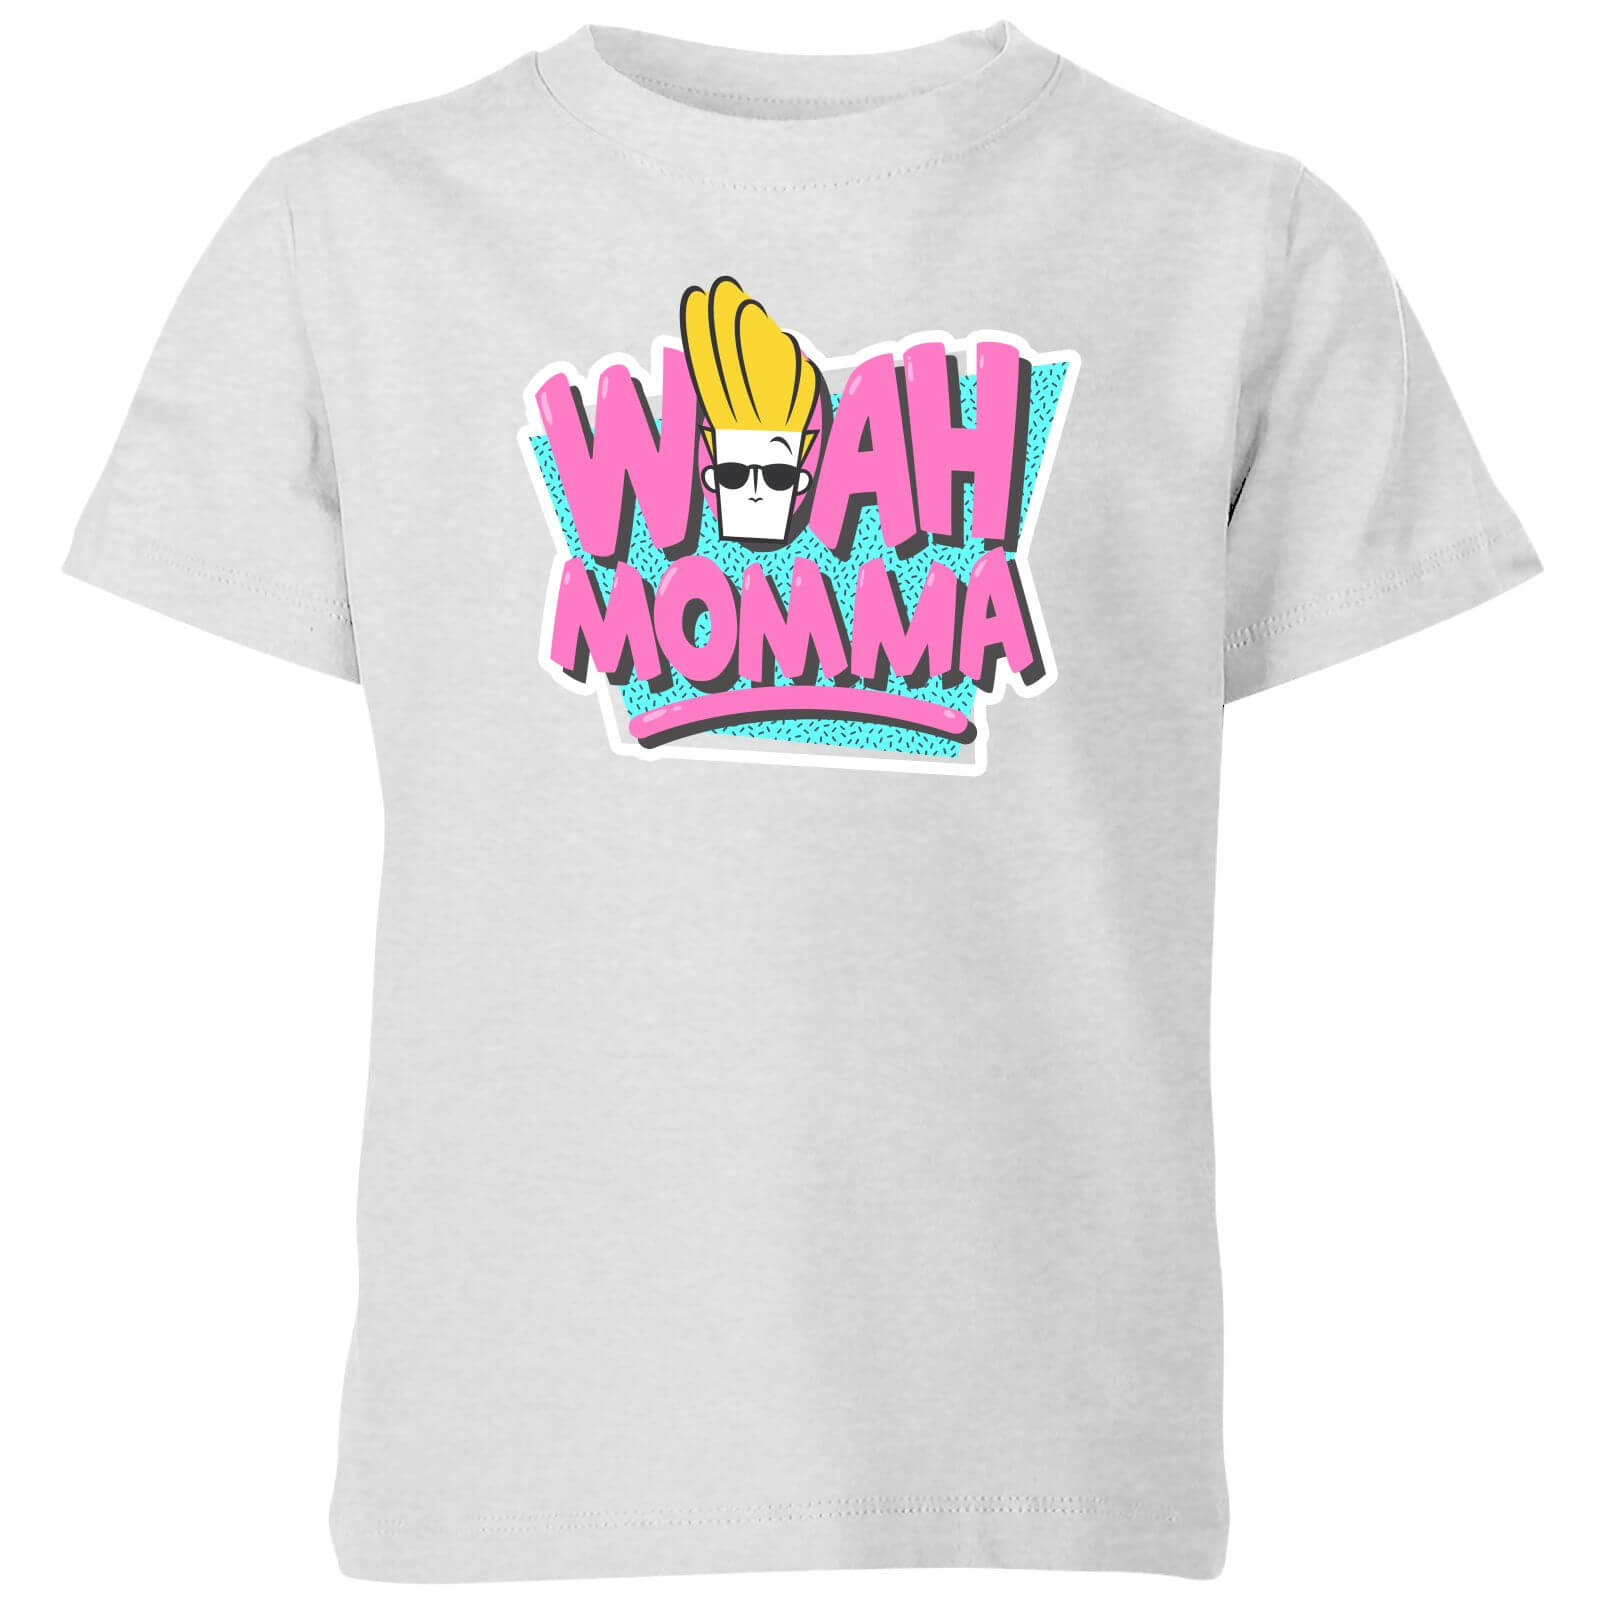 Cartoon Network Spin-Off Johnny Bravo Woah Momma 90's Kids' T-Shirt - Grey - 5-6 Years - Grey